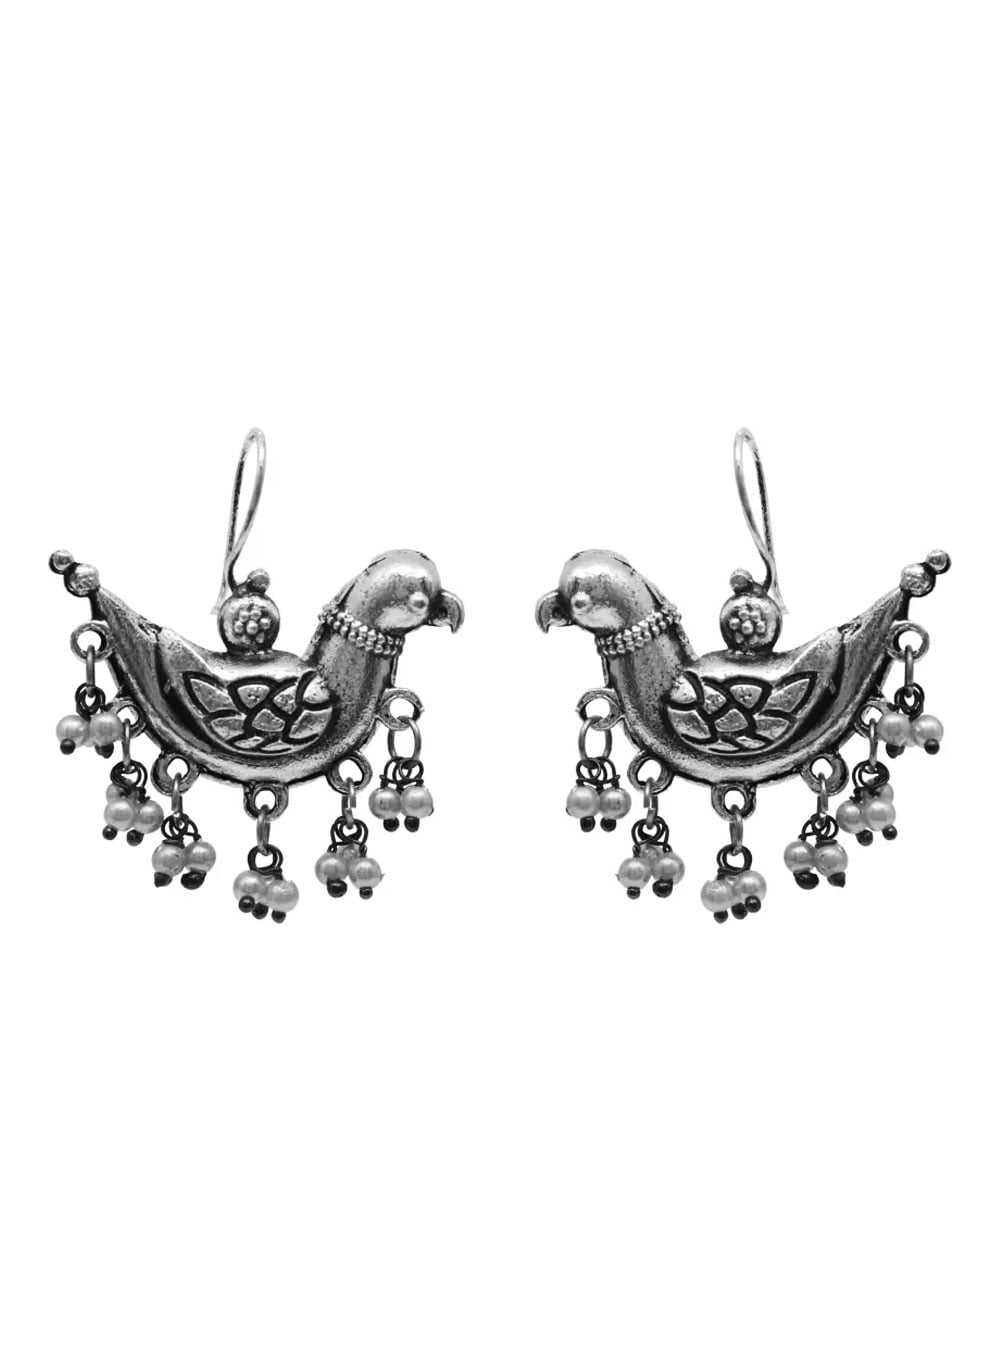 parrots-oxidised-boho-earrings-for-jeans-tops-nesy-lifestyle